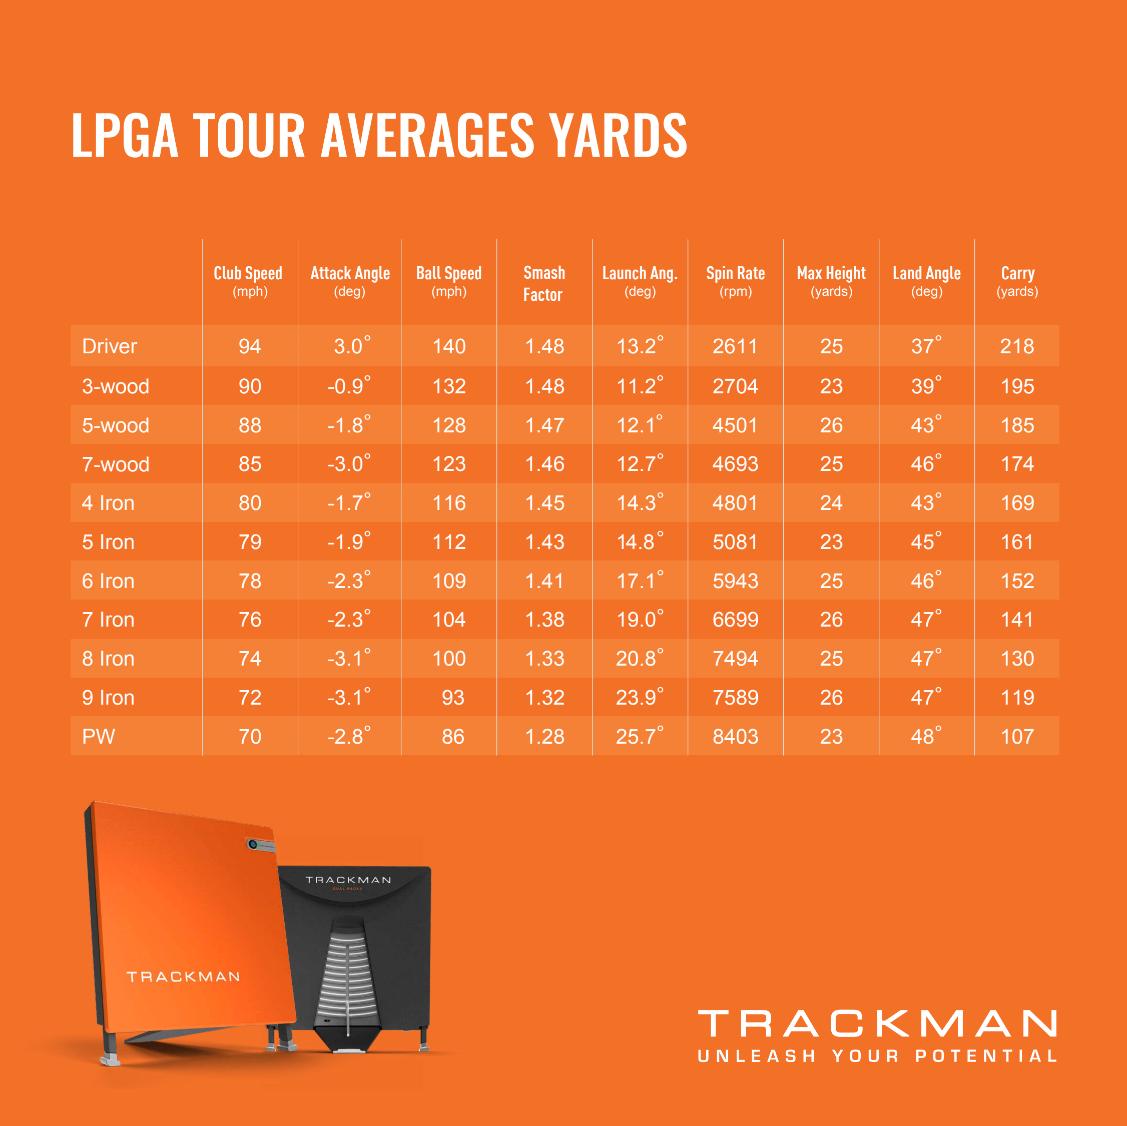 REVEALED! Trackman launches 2019 PGA Tour and LPGA Tour stats